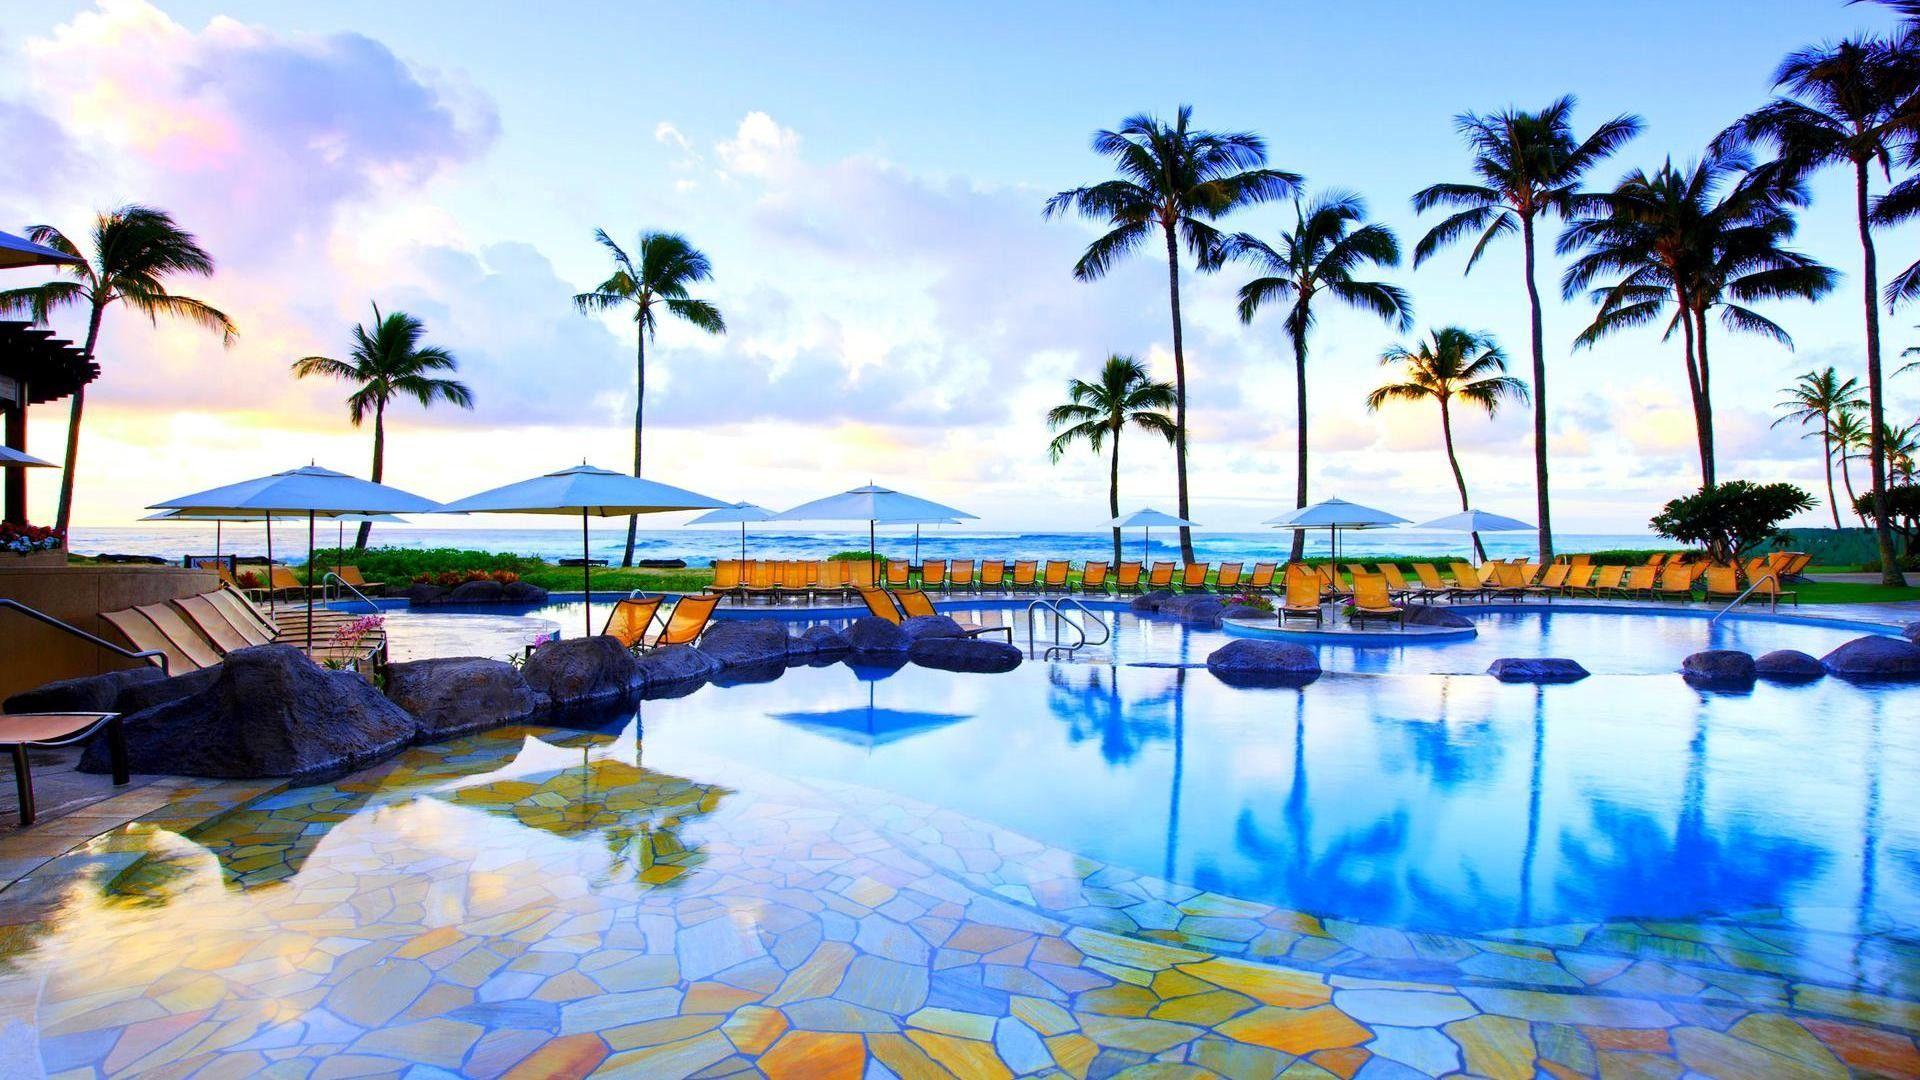 Other: Beautiful Resort Pool Kauai Hawaii Sheraton Tiles Sea Reort